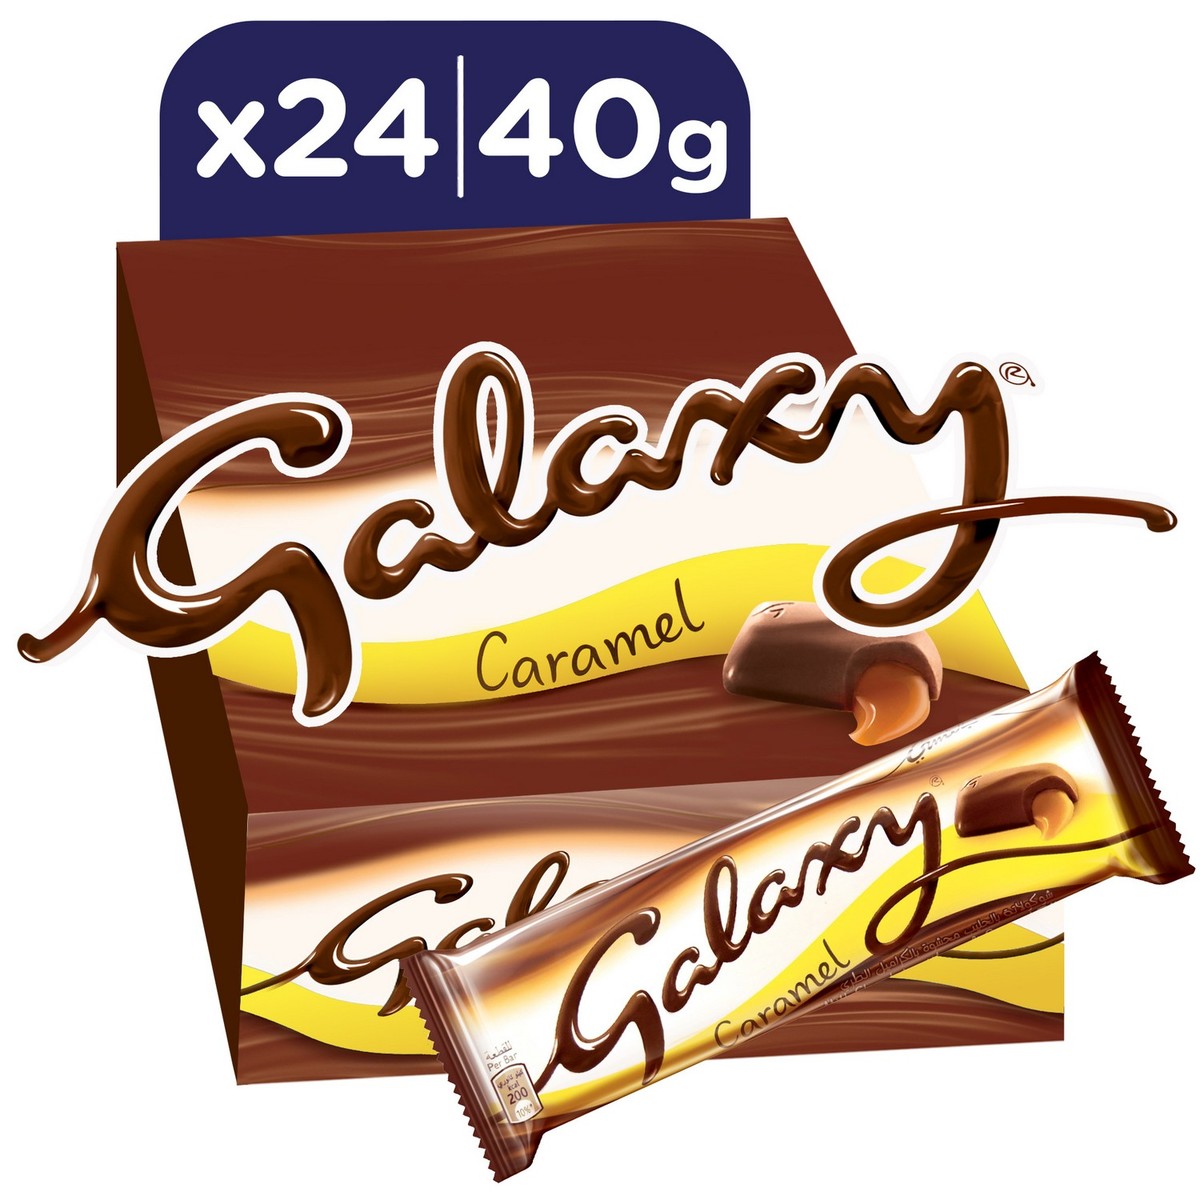 Galaxy Caramel Chocolate Bar 24 x 40 g